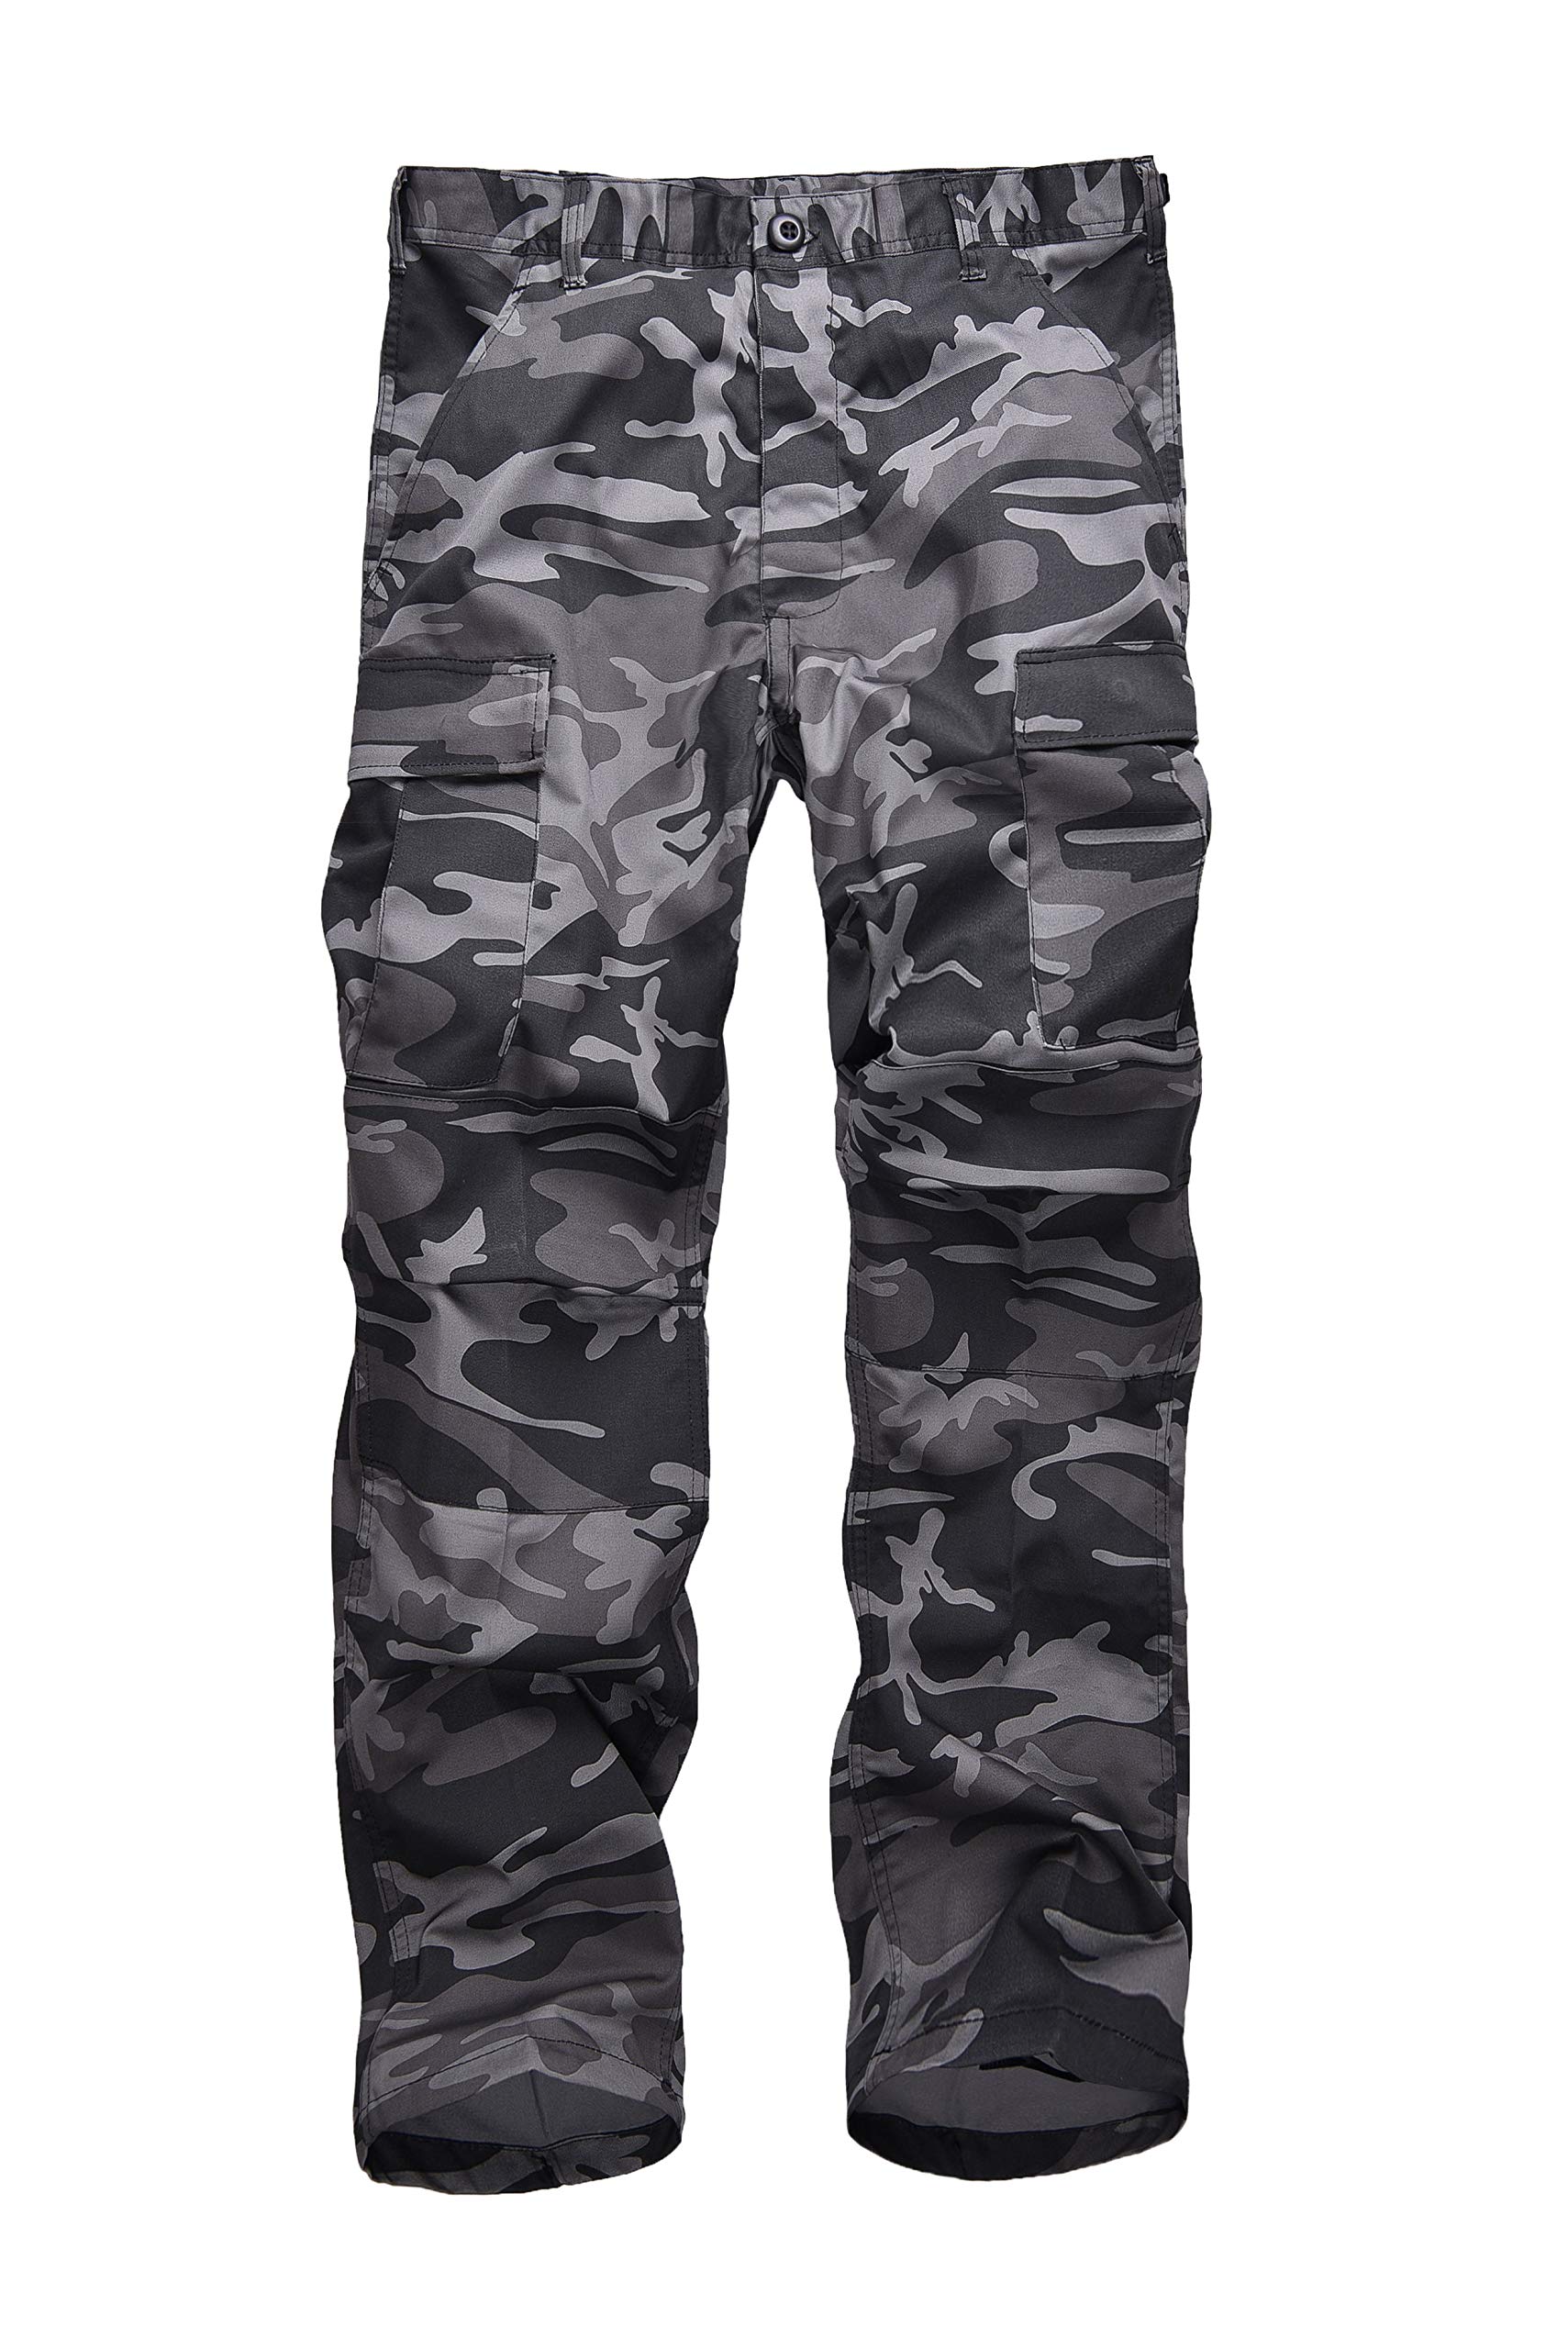 BACKBONE Mens Fashion Bright Camouflage Cargo Pants Military Combat Style BDU Pants (XL, Black Camo)